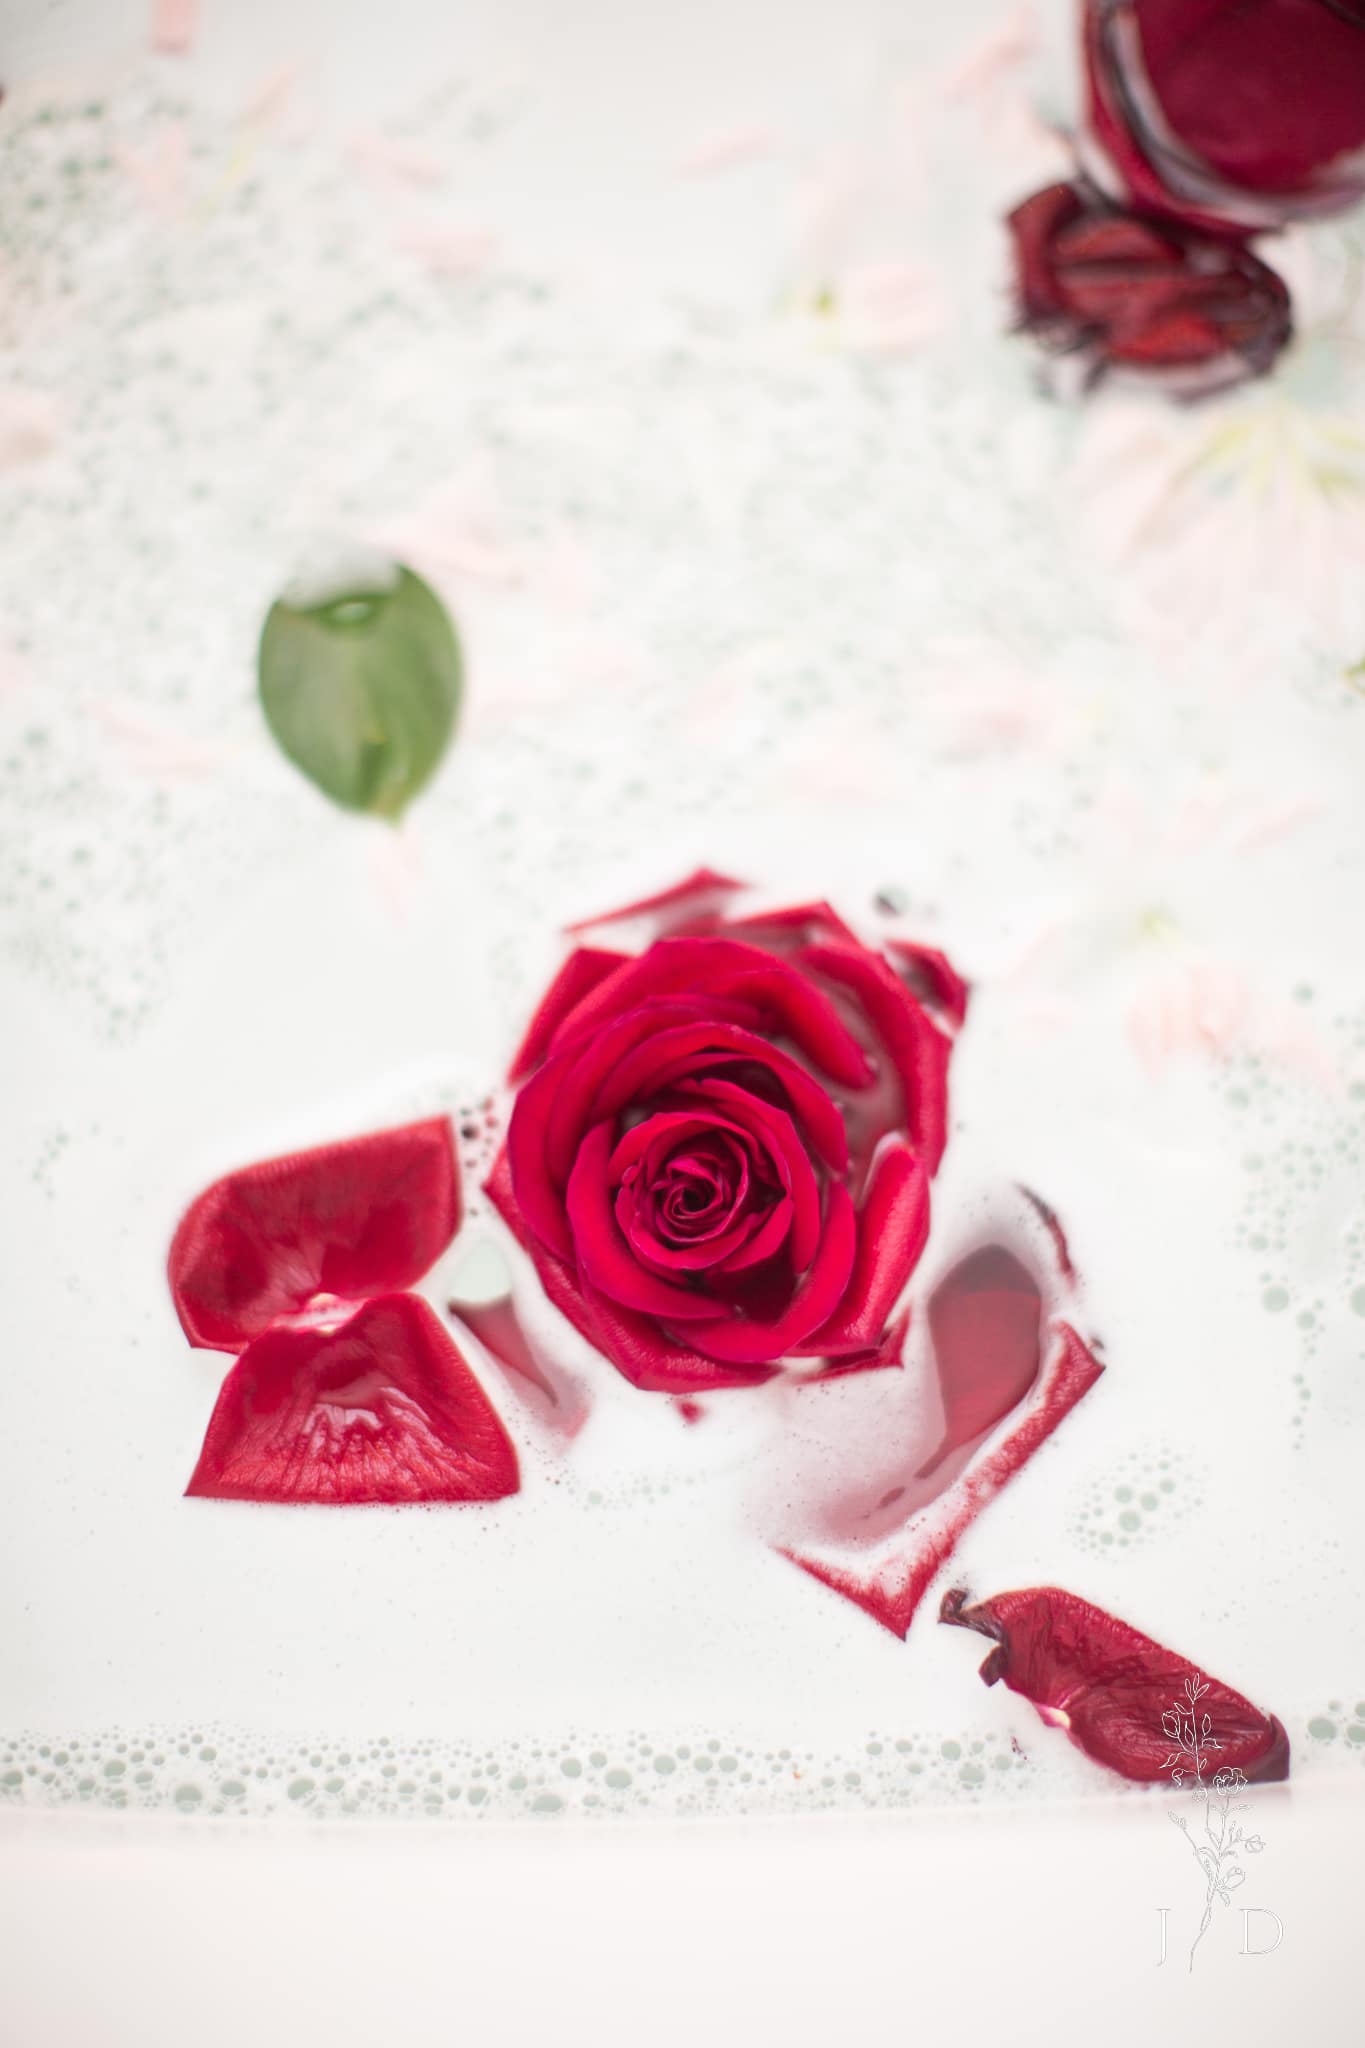 7 Best Rose petal bath ideas  bath, relaxing bath, rose petals